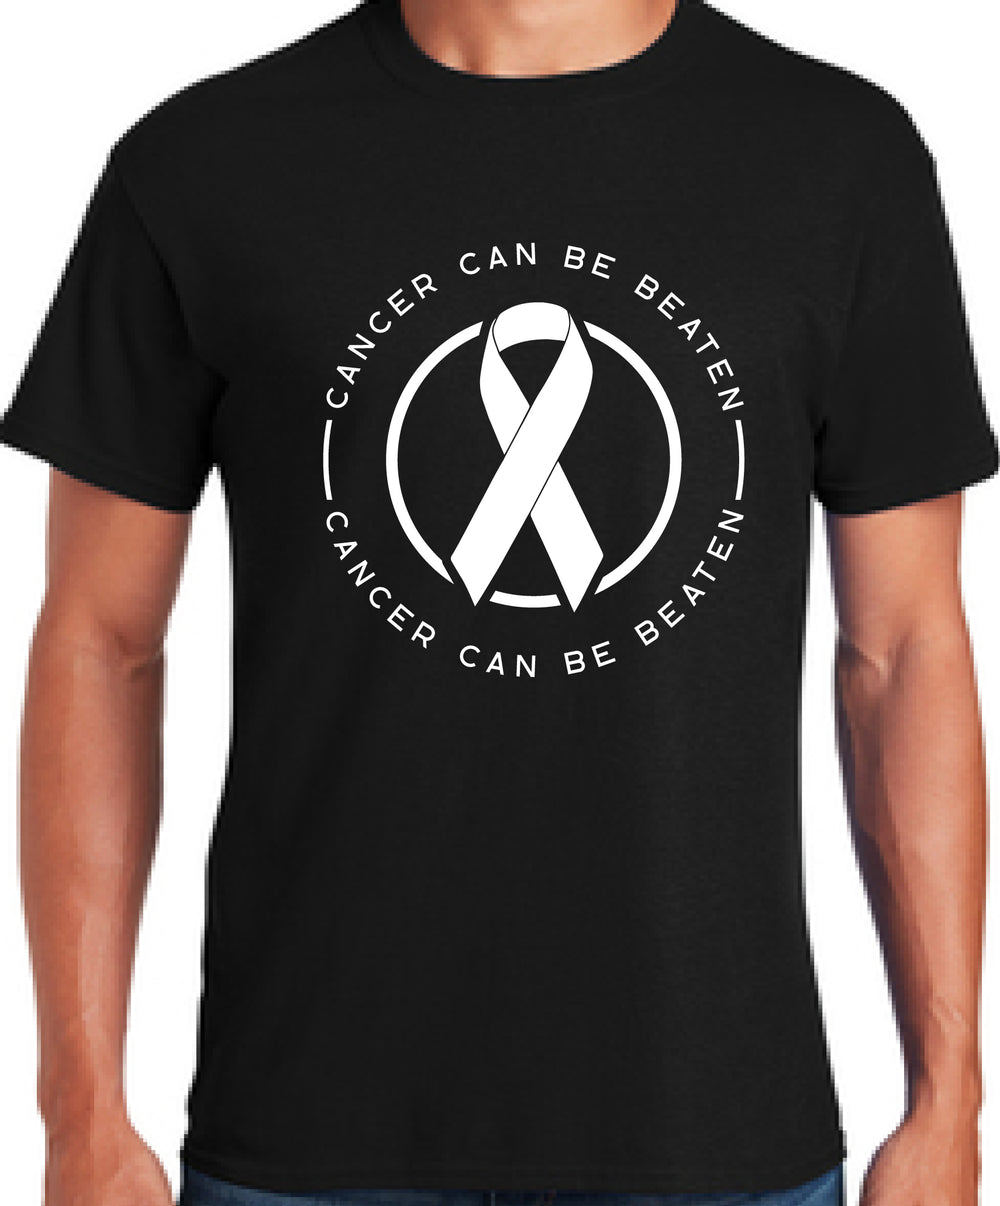 Cancer Can Be Beaten T-Shirt - Cancer Can Be Beaten